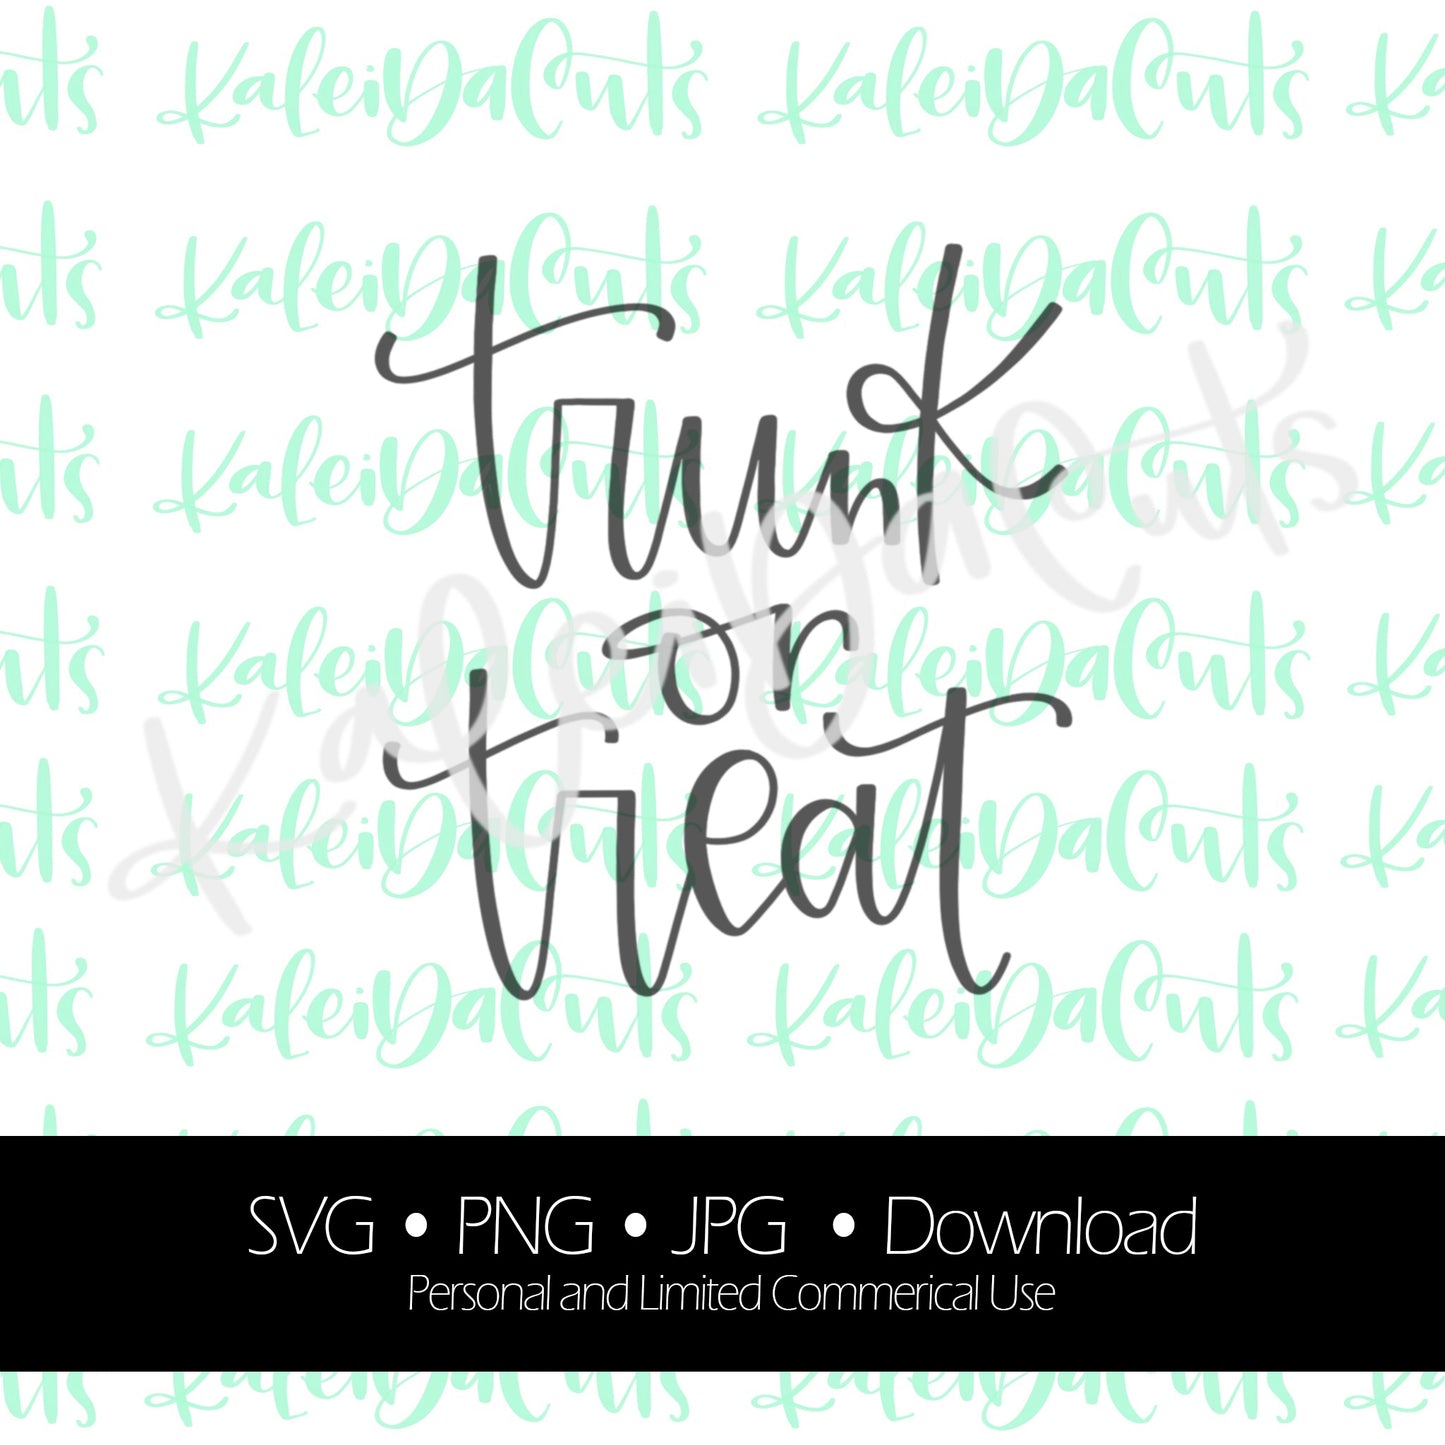 Trunk or Treat Lettering - Digital Download.